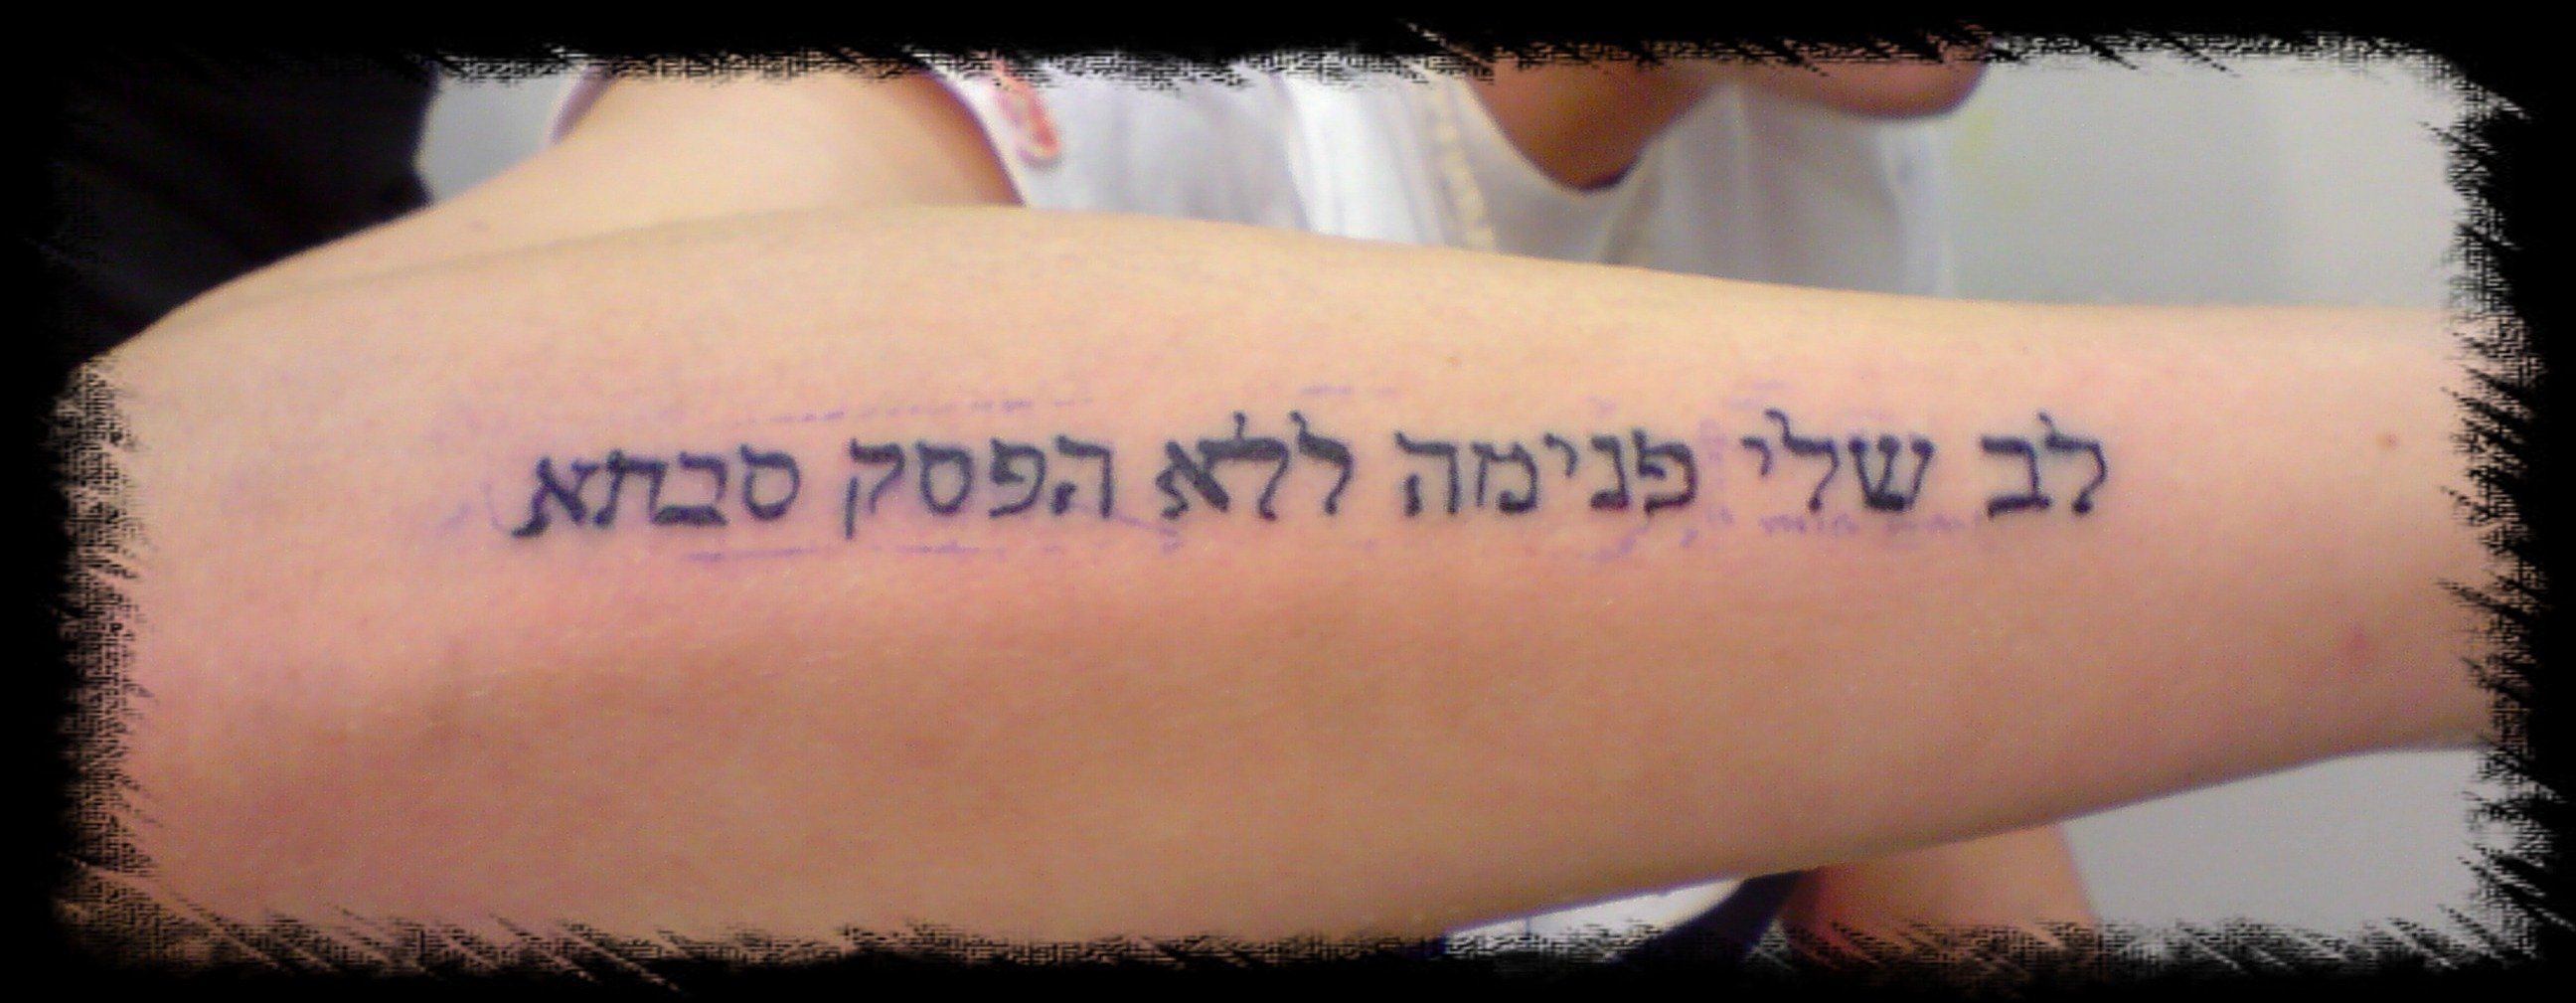 Воздух на латыни. Татуировки надписи на иврите. Надпись на иврите тату. Тату надпись на ивртин. Тату надпись на иврите на руке.